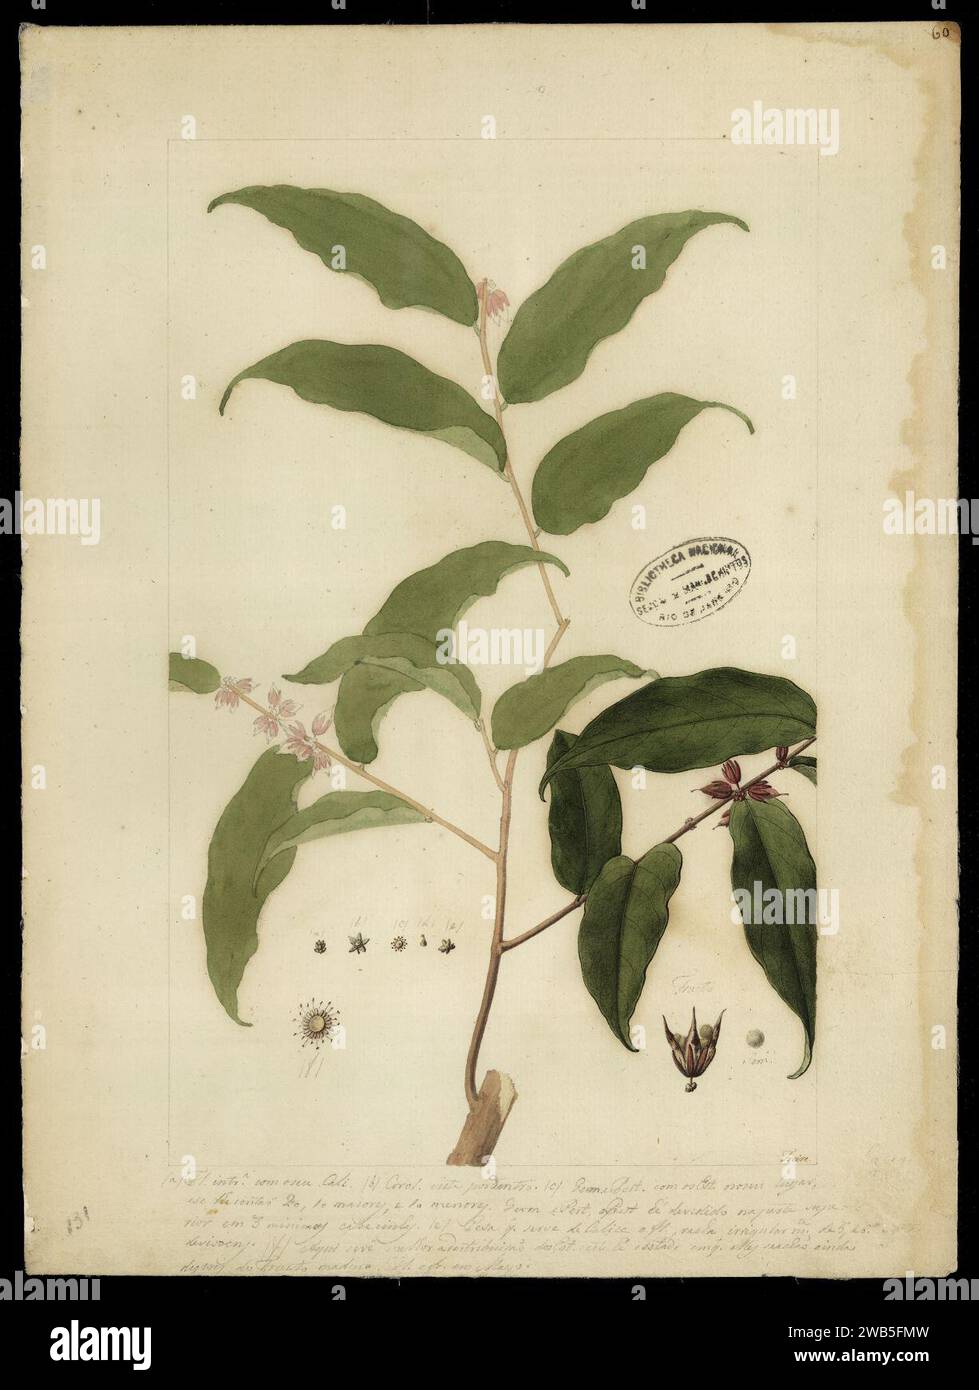 (Casearia spruceana, Bth.)., Stock Photo